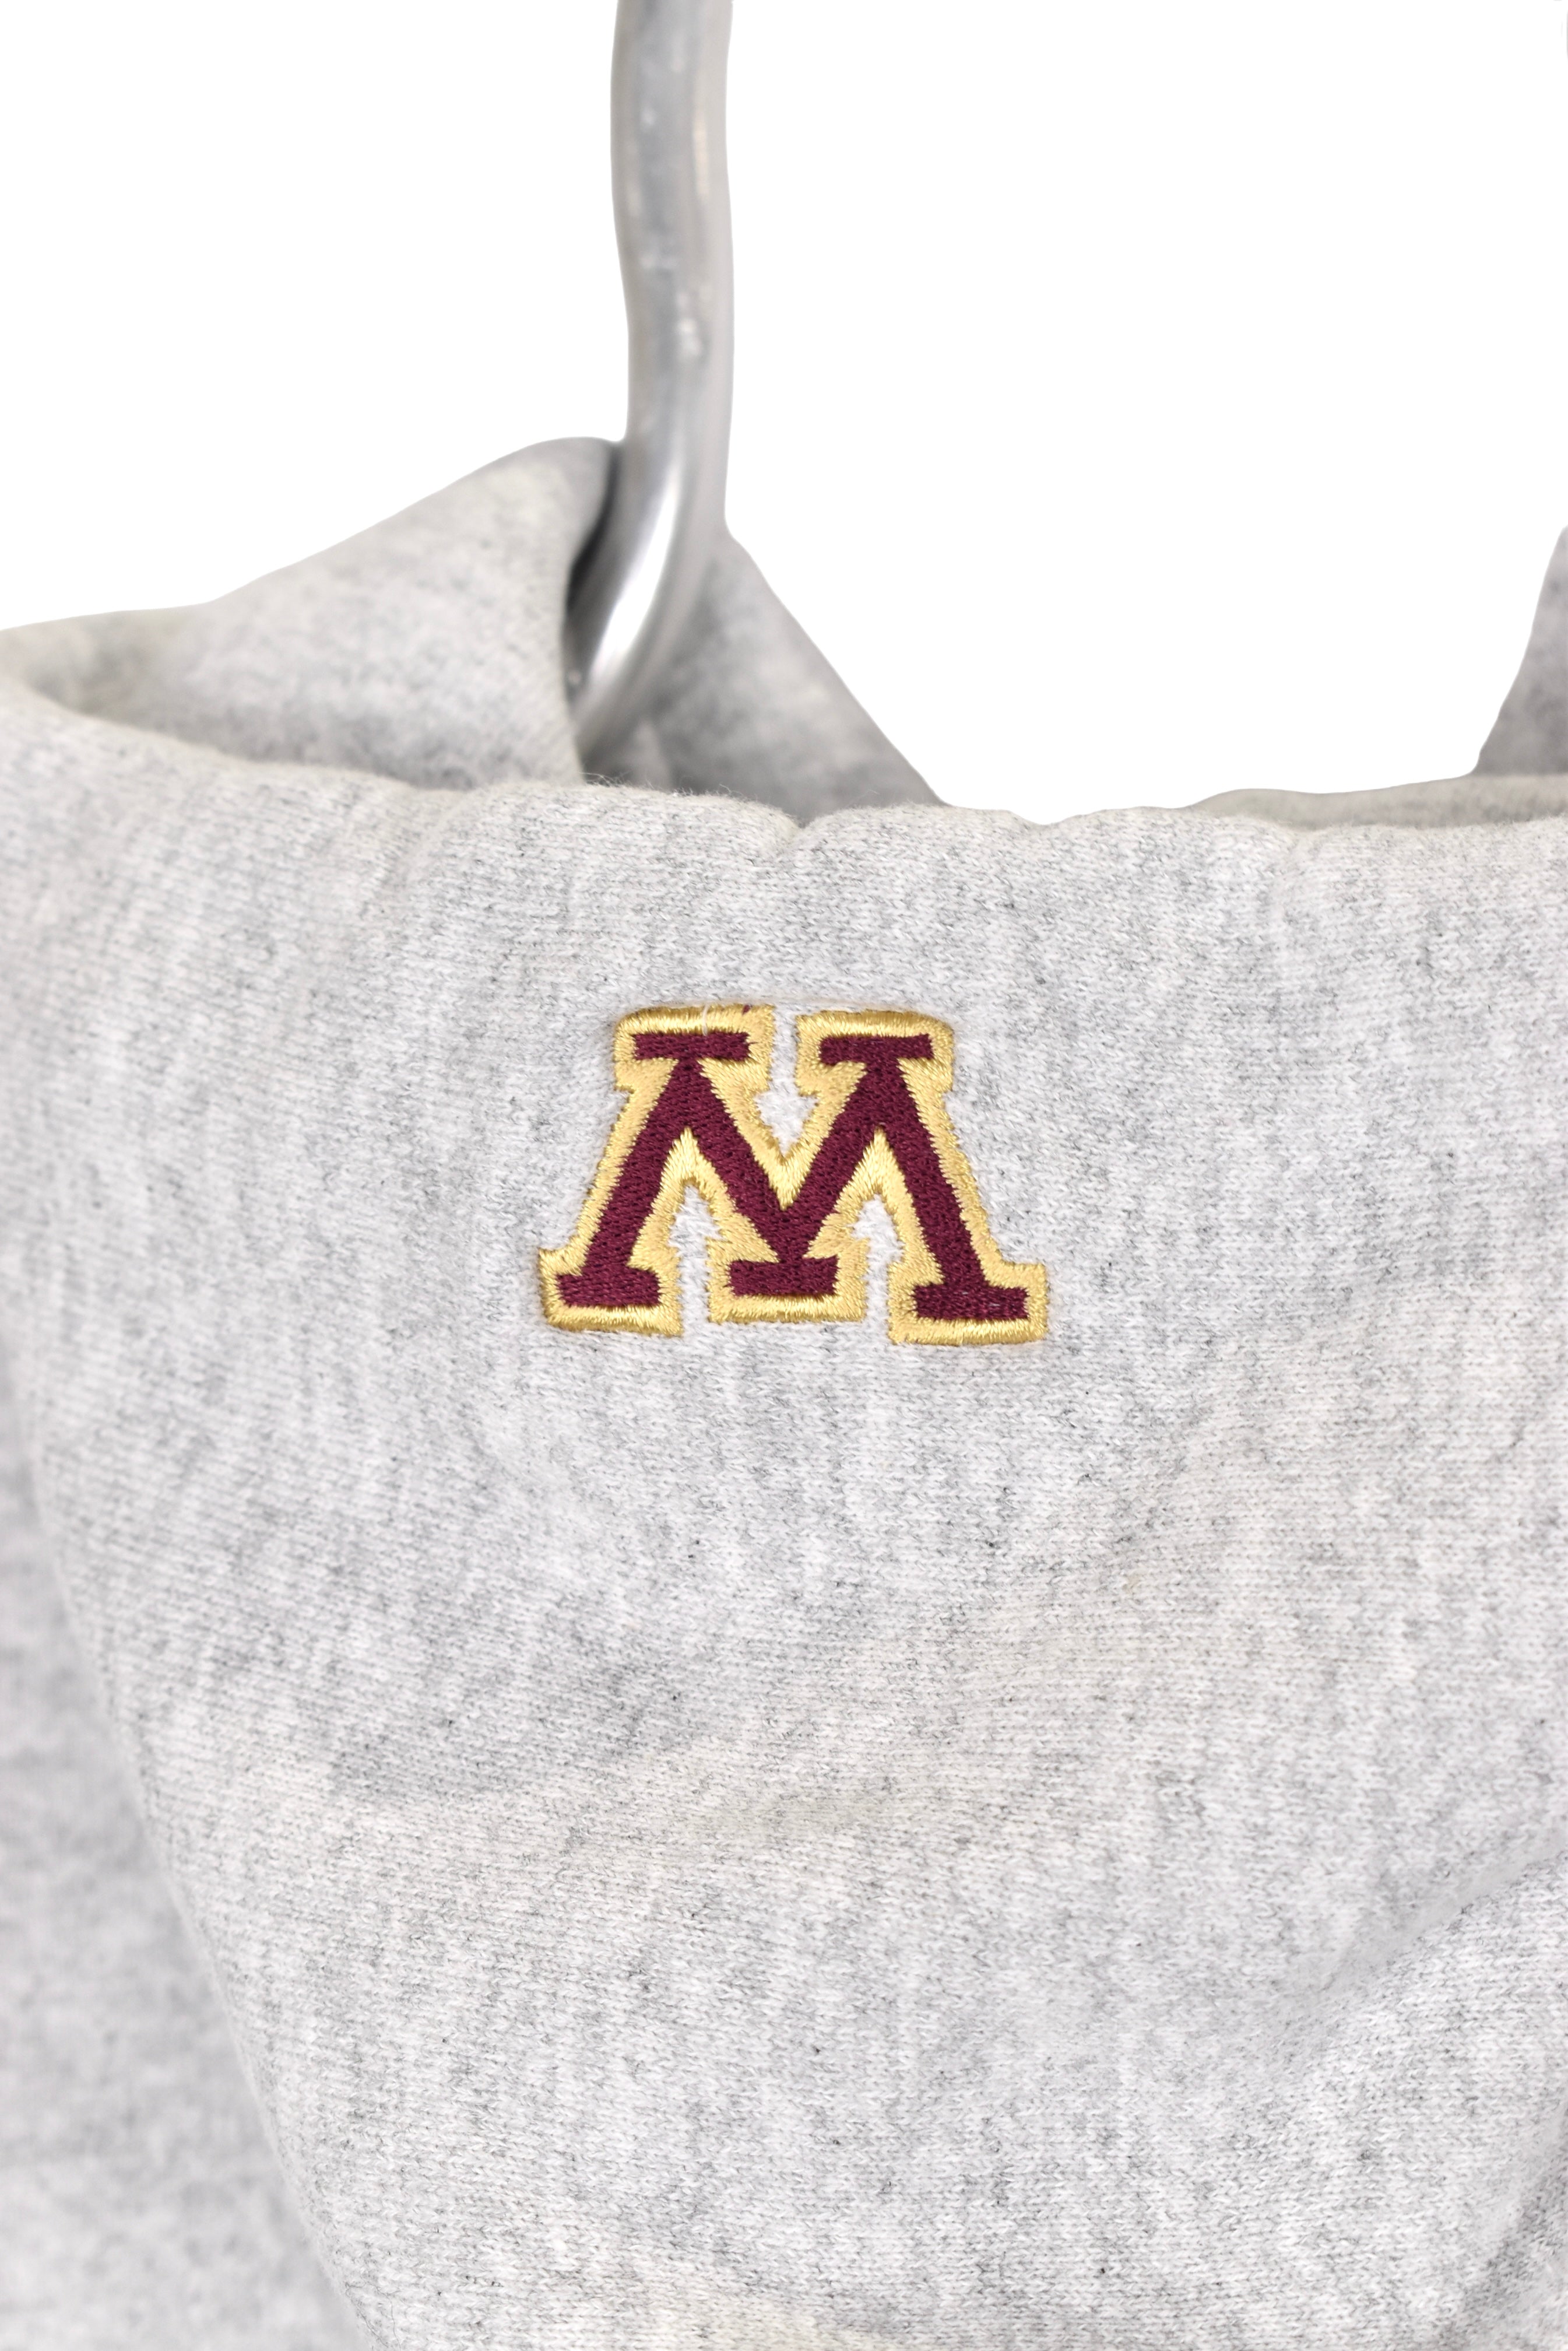 Vintage University of Minnesota hoodie, grey embroidered sweatshirt - Large